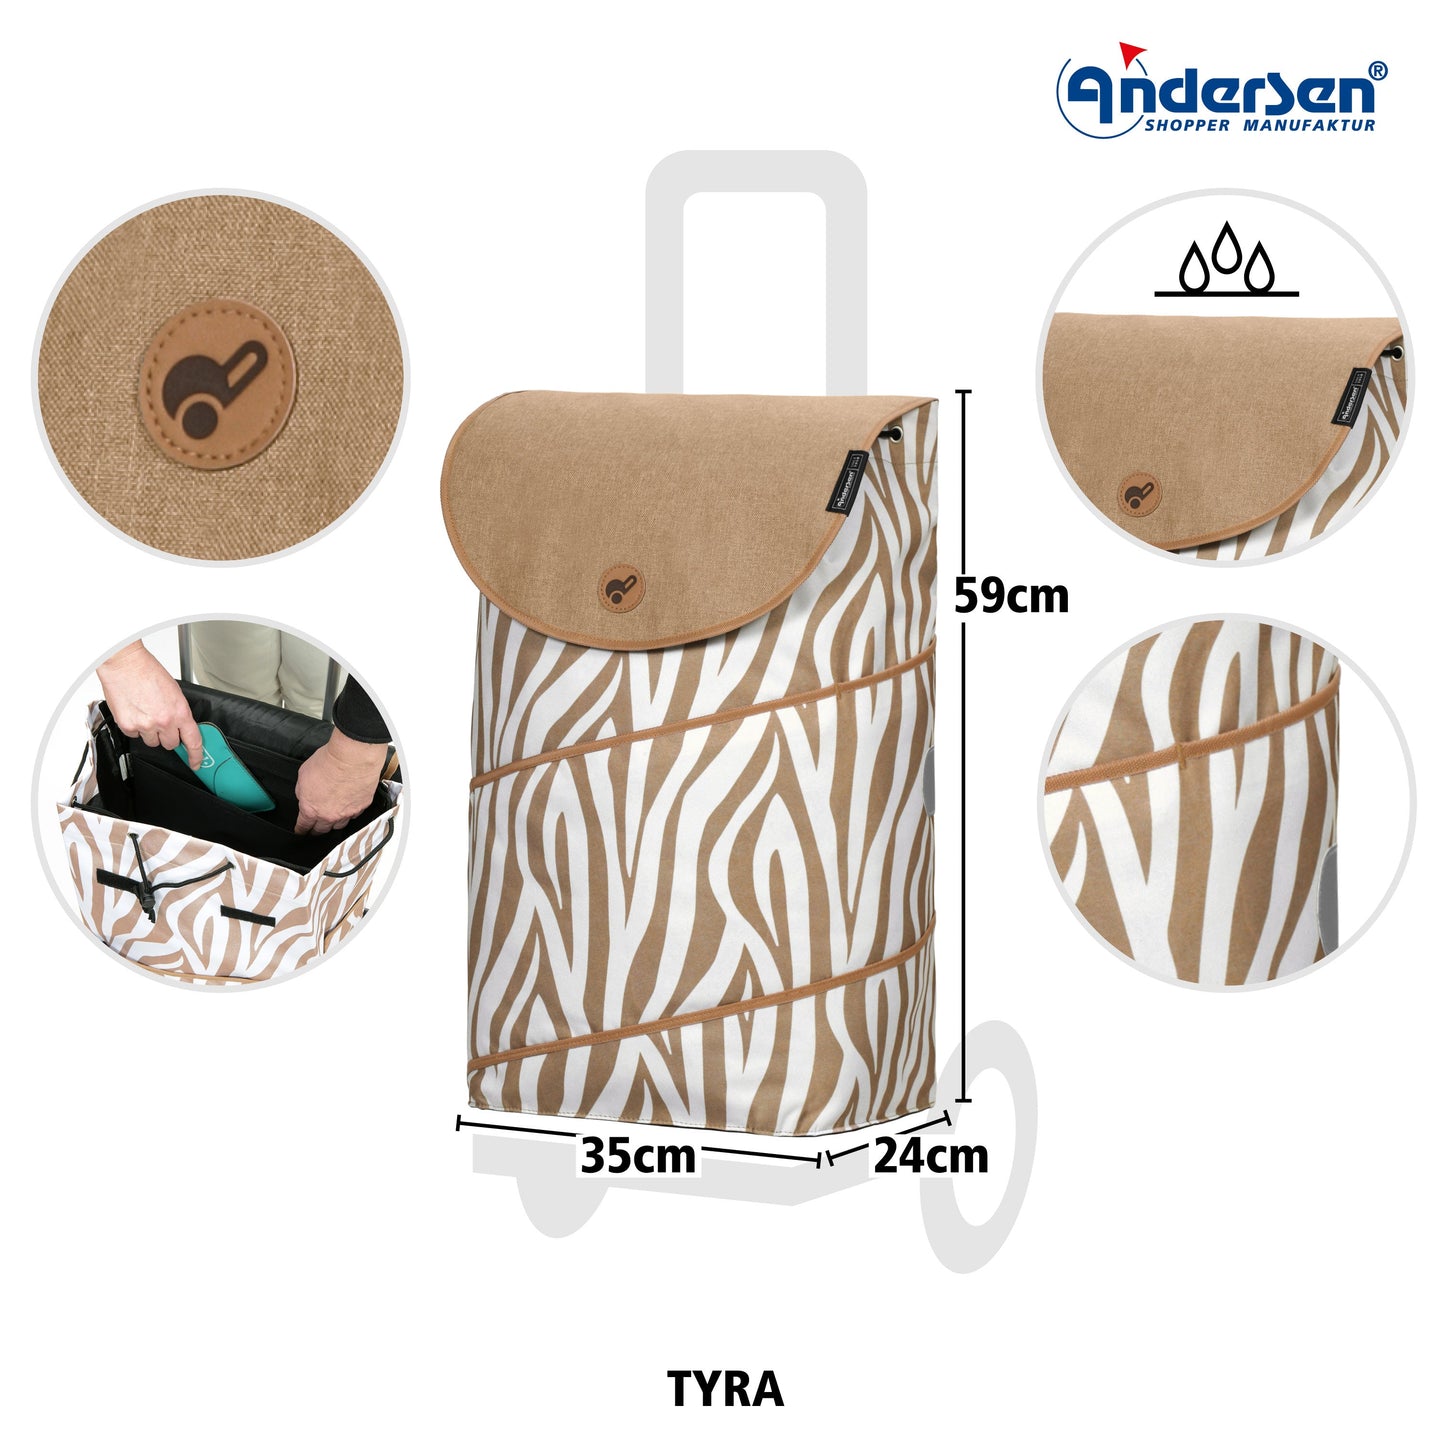 Andersen Shopper Manufaktur-Scala Shopper Plus Tyra zebra-www.shopping-trolley.ch-bild3